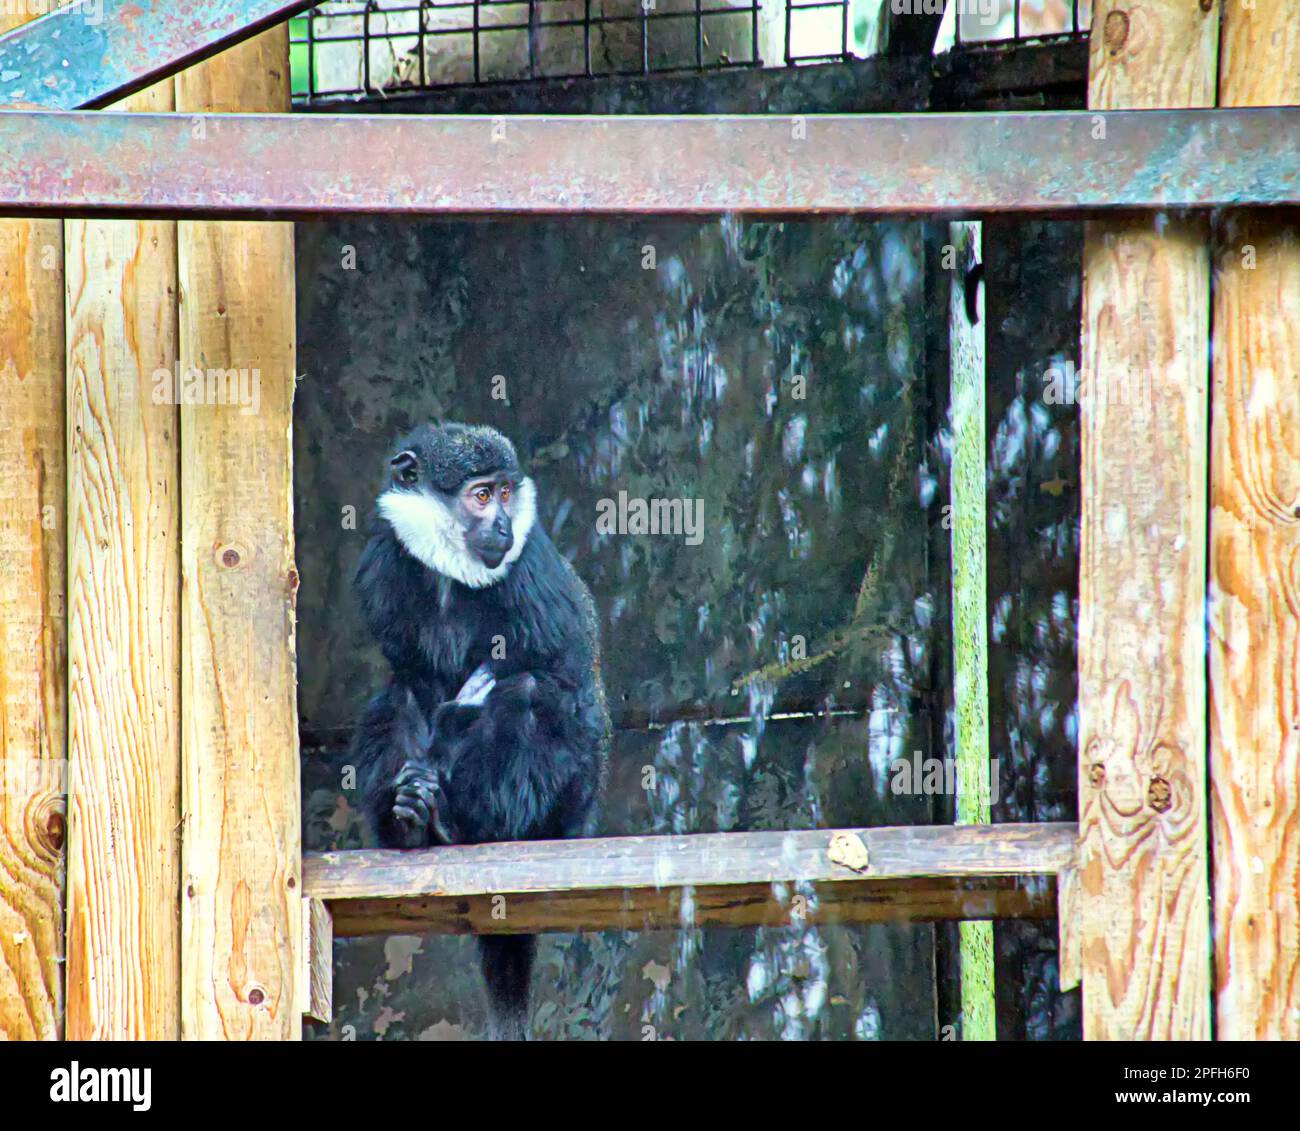 edinburgh zoo Buff-cheeked gibbon unhappy looking in housing Stock Photo